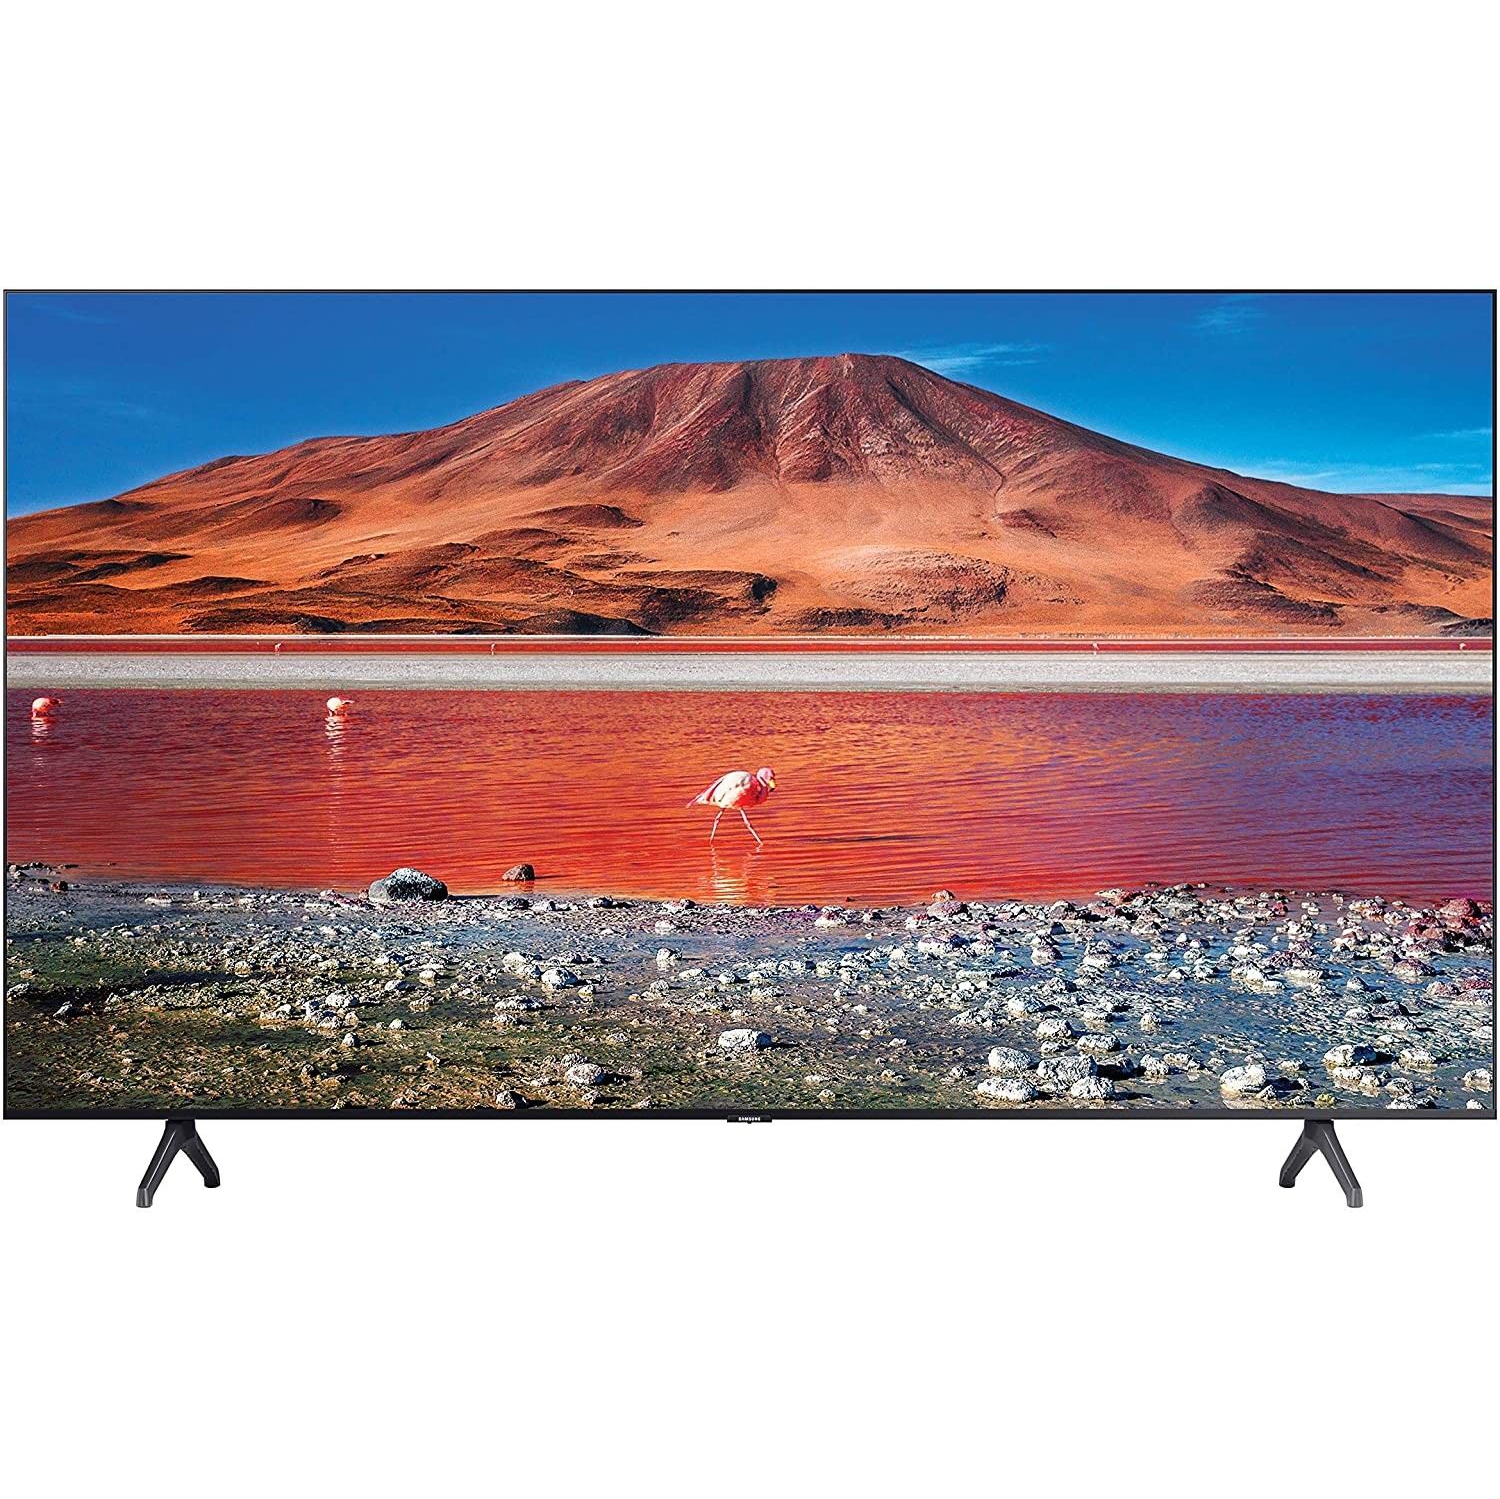 SAMSUNG UN43TU7000 43" 4K HDR LED SMART TV Seller Provided Warranty Included